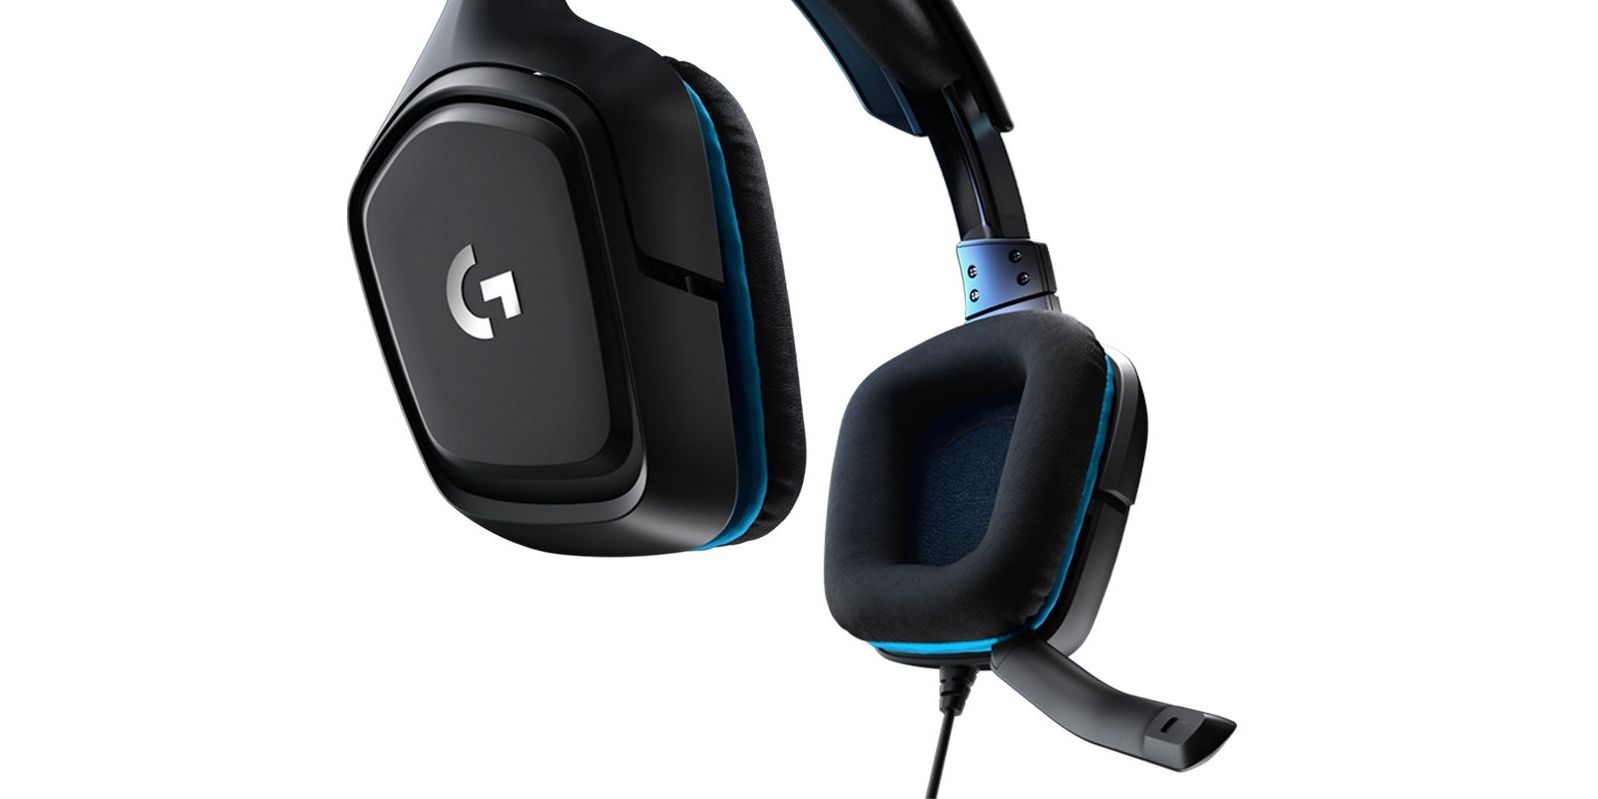 G432 7.1 Black/Blue Surround Gaming Headset Logitech - Versus Gamers